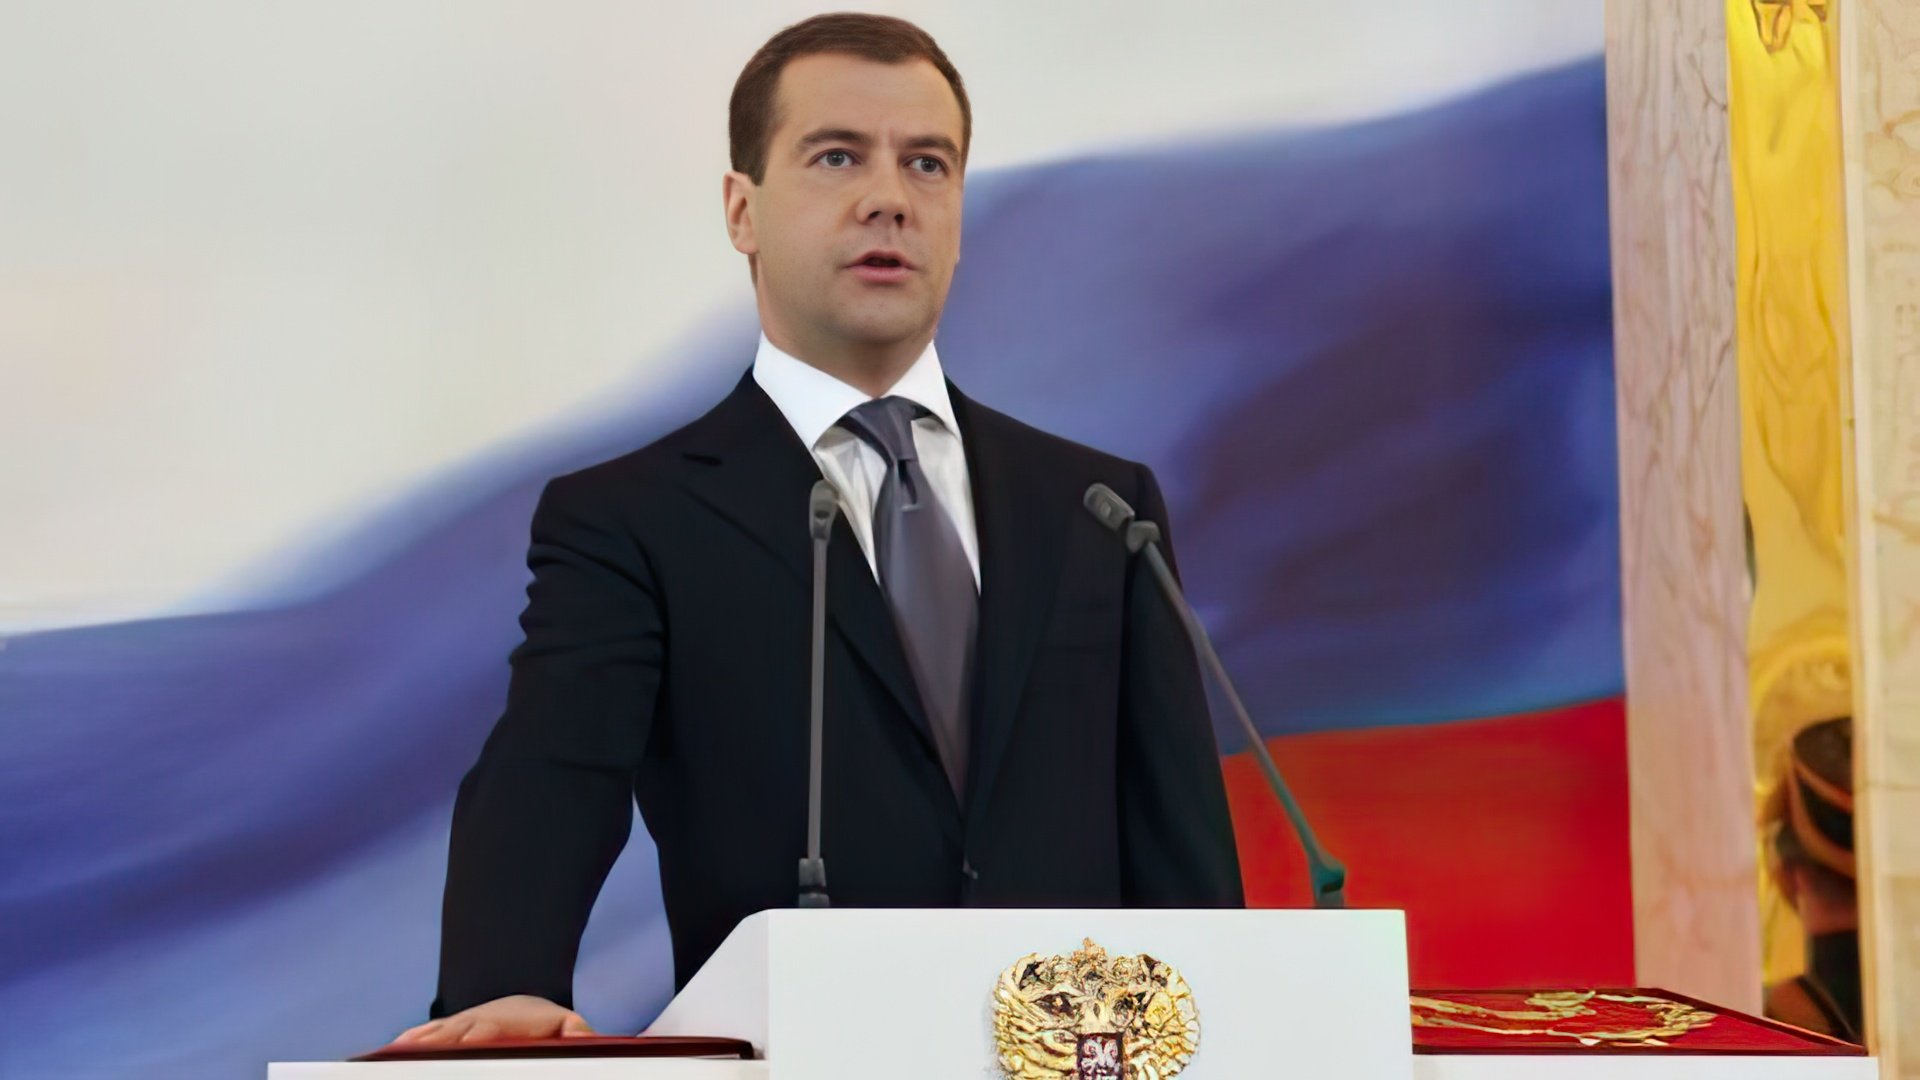 Dmitry Medvedev’s inauguration